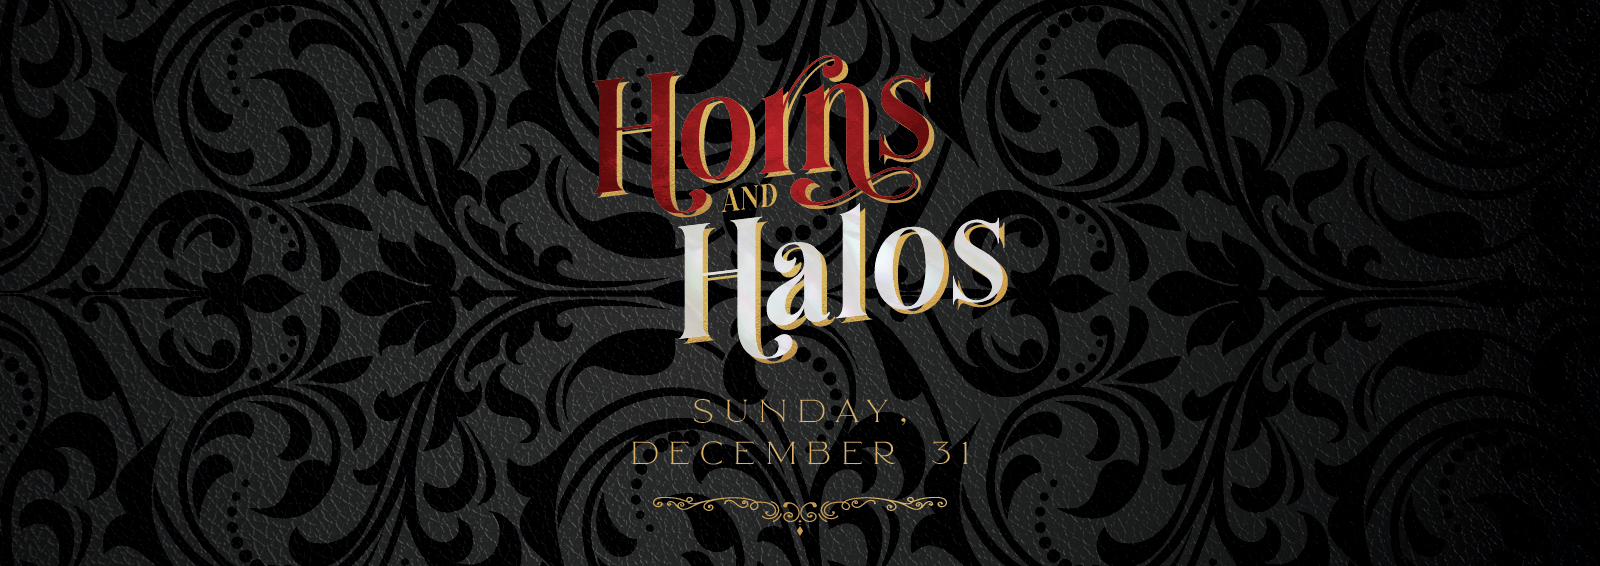 Horns and Halos Sunday, December 31